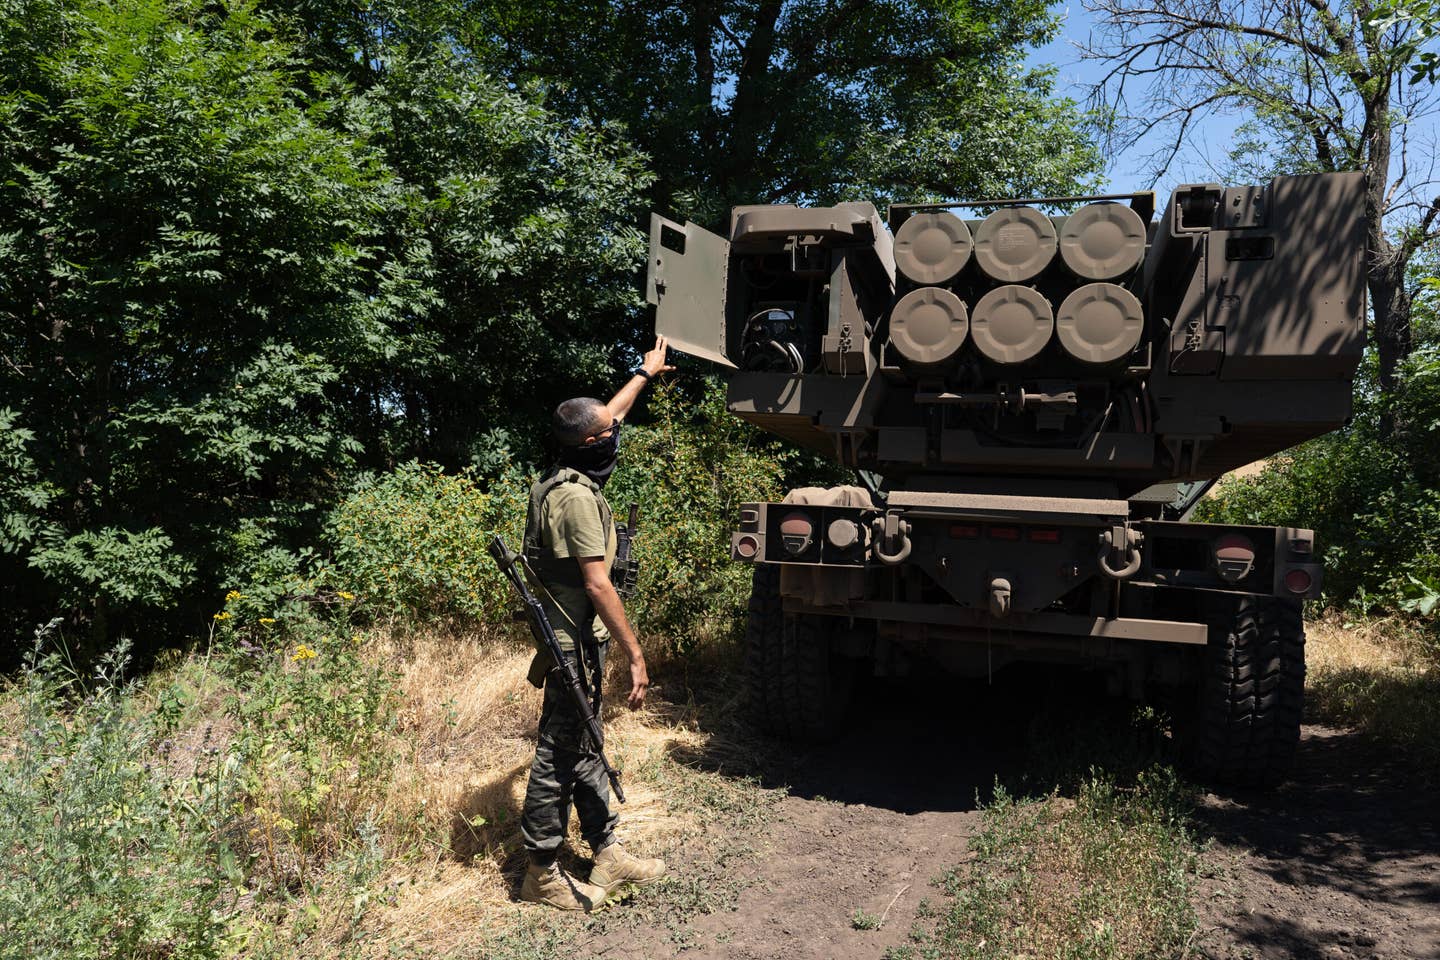 EASTERN UKRAINE , UKRAINE - JULY 1: Kuzia, the commander of the unit, shows the rockets on HIMARS vehicle in Eastern Ukraine on July 1, 2022. 
(Photo by Anastasia Vlasova for The Washington Post via Getty Images)